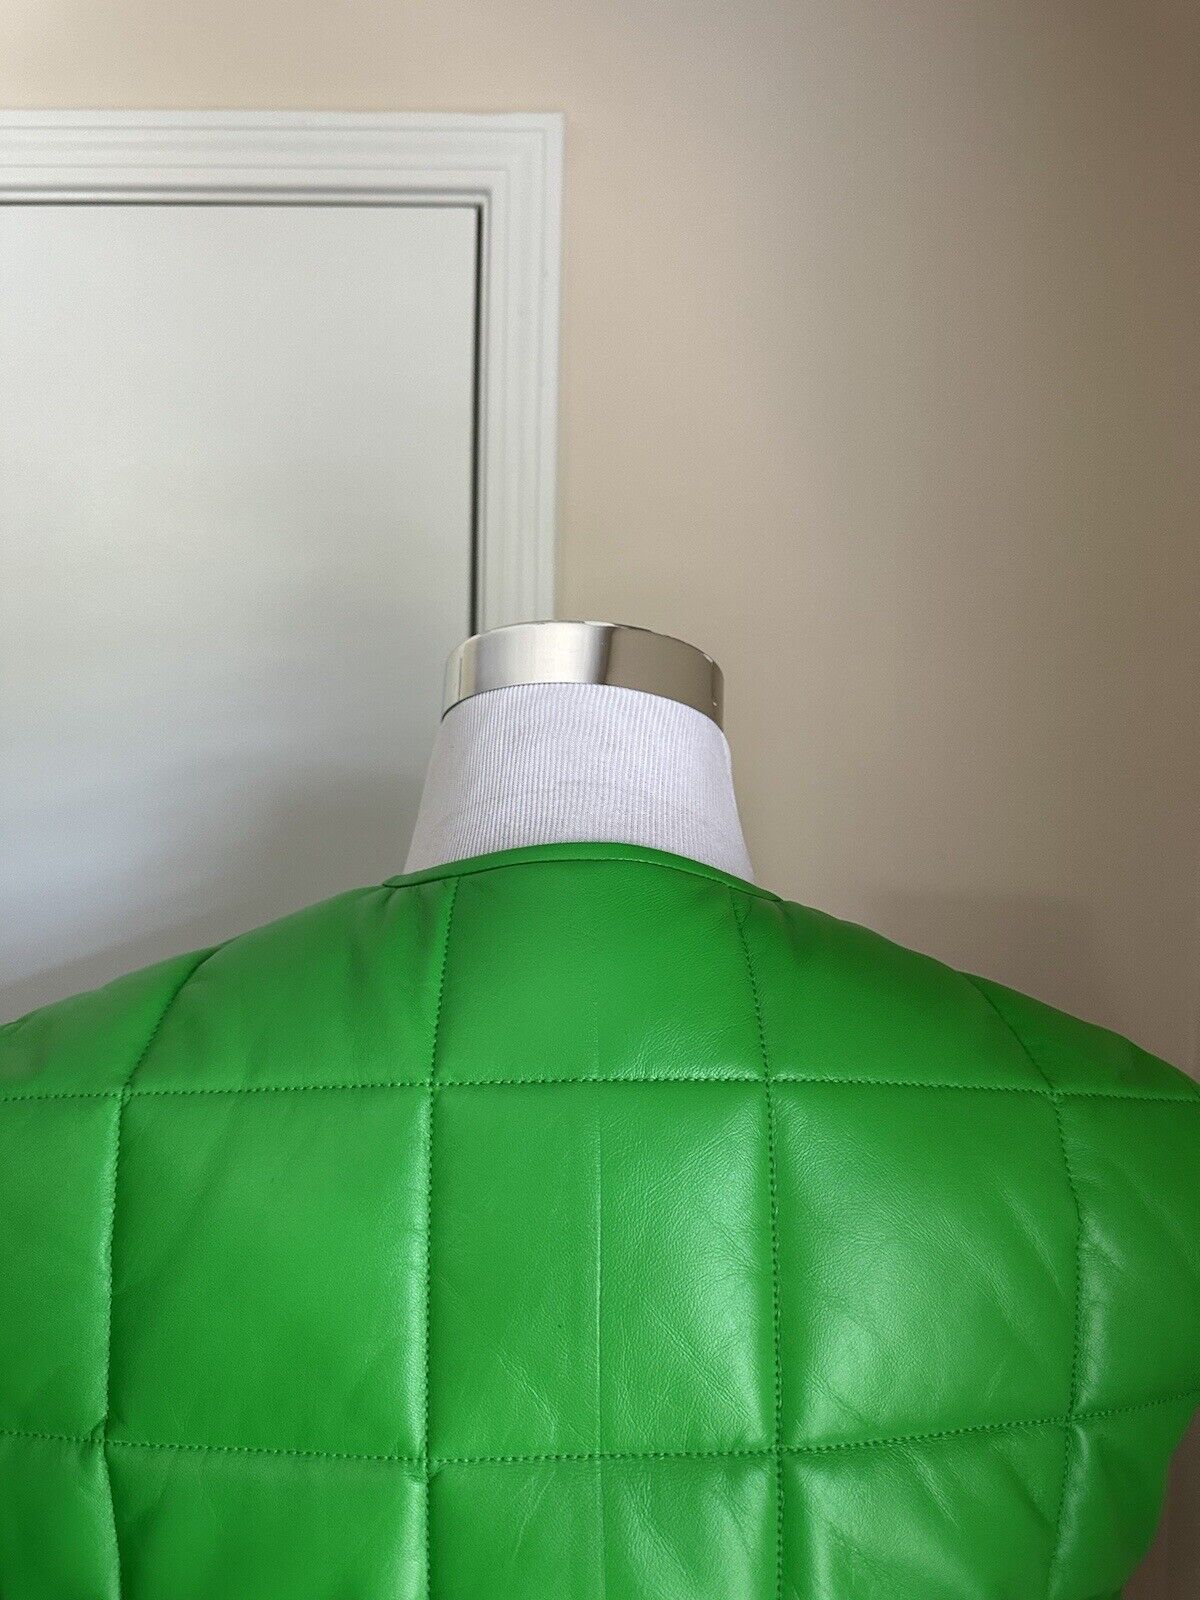 New $3100 Bottega Veneta Men’s Puffer Jacket Vest Green Size S Italy